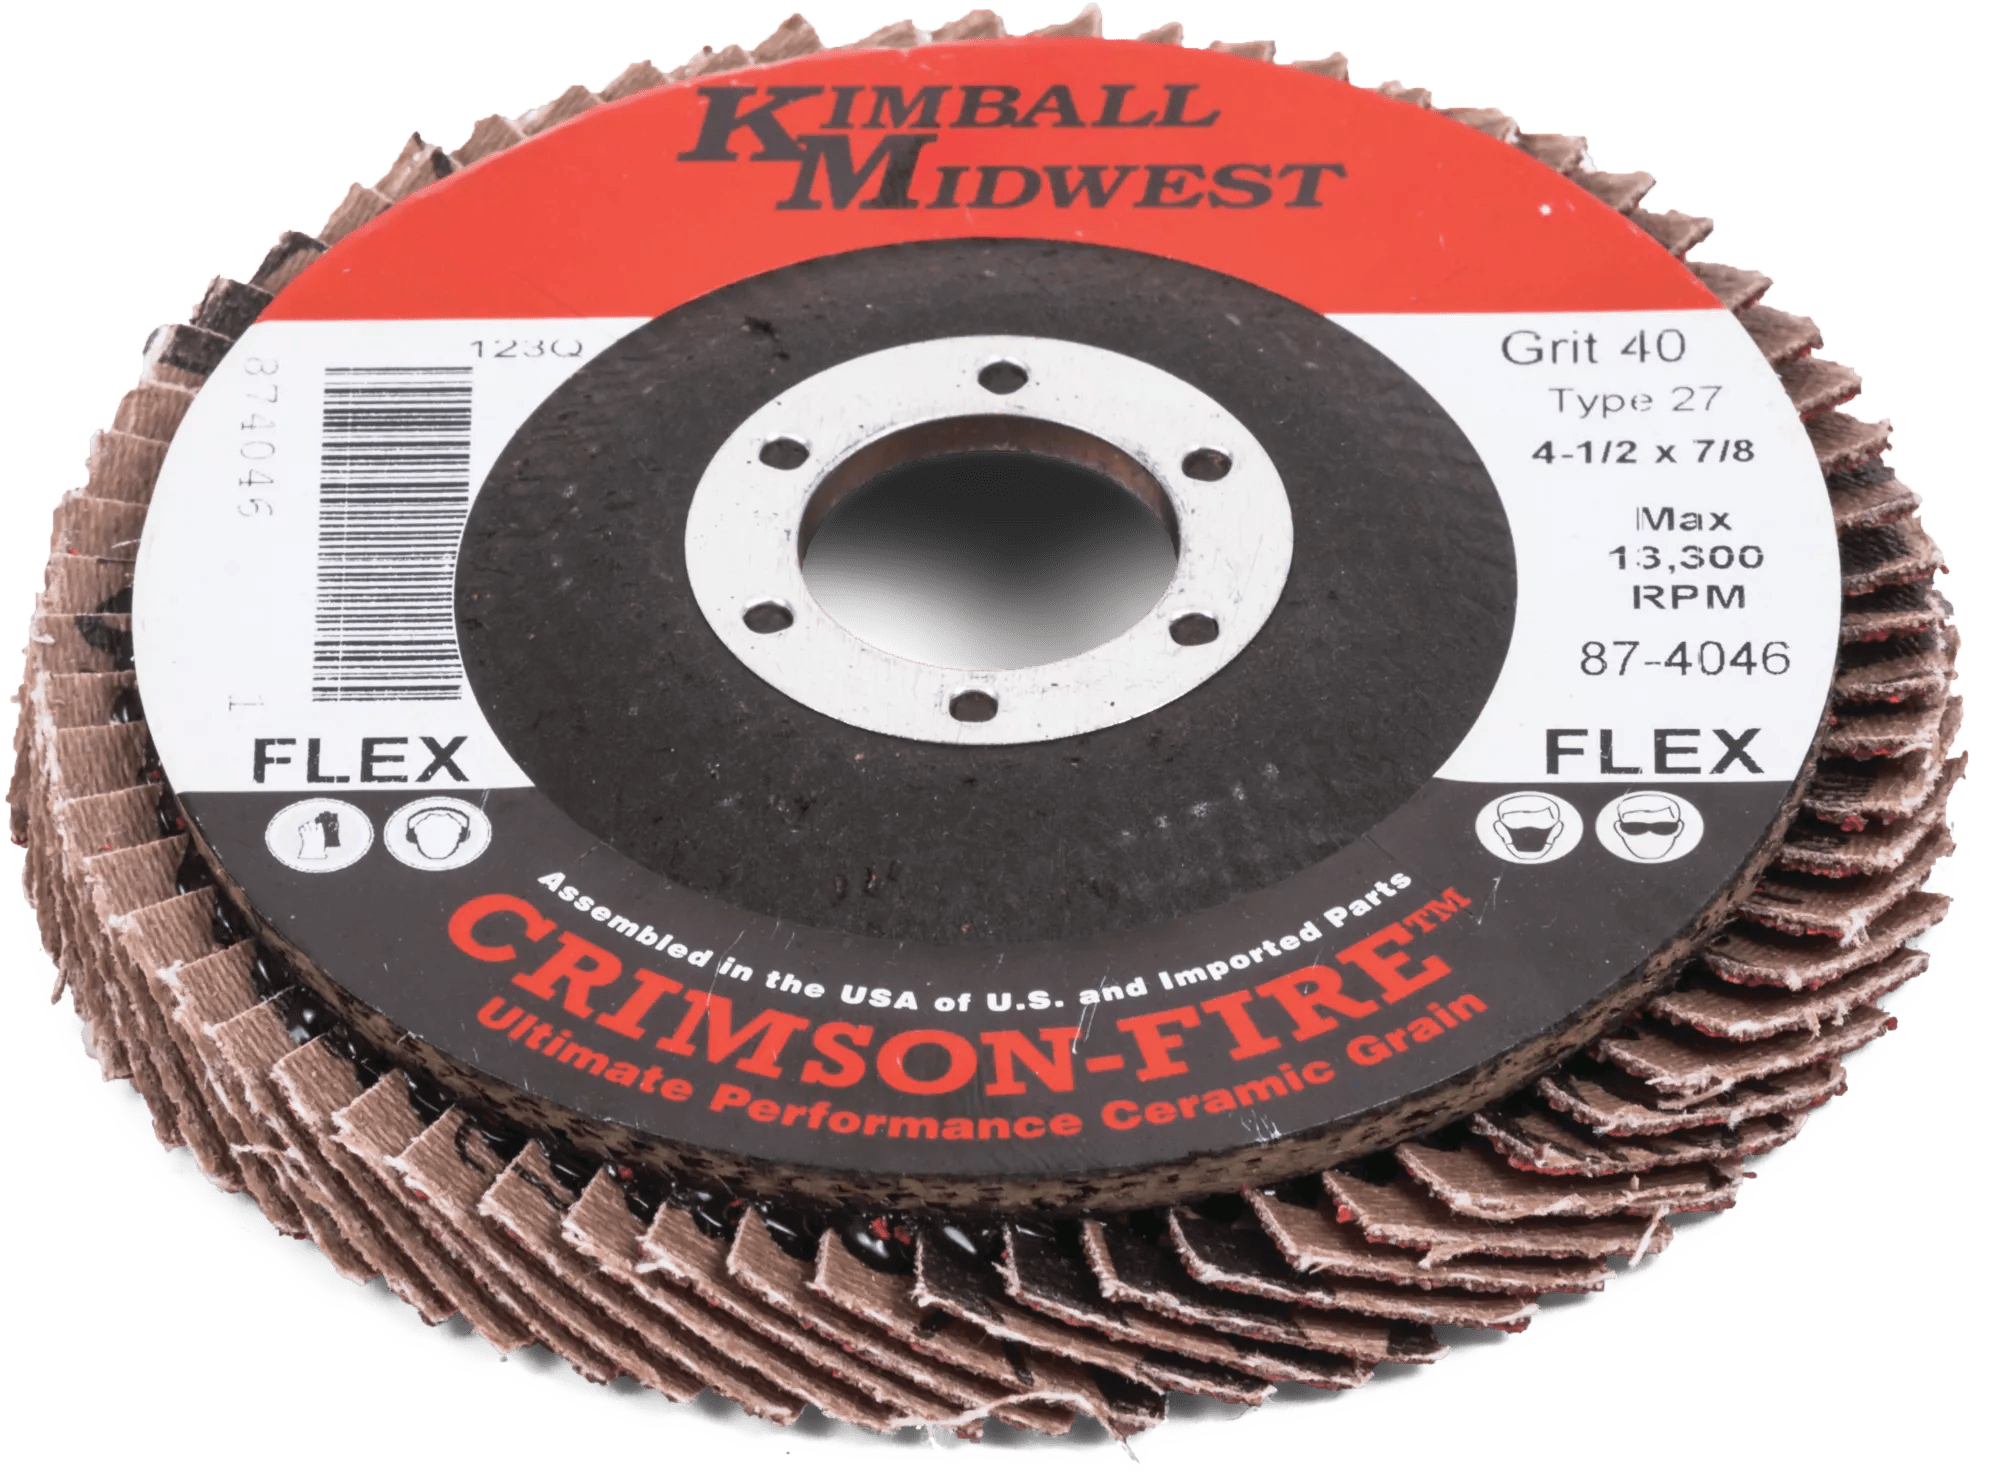 4-1/2" x 7/8" 40 Grit Type 27 Crimson-Fire™ Flex Ceramic Flap Disc